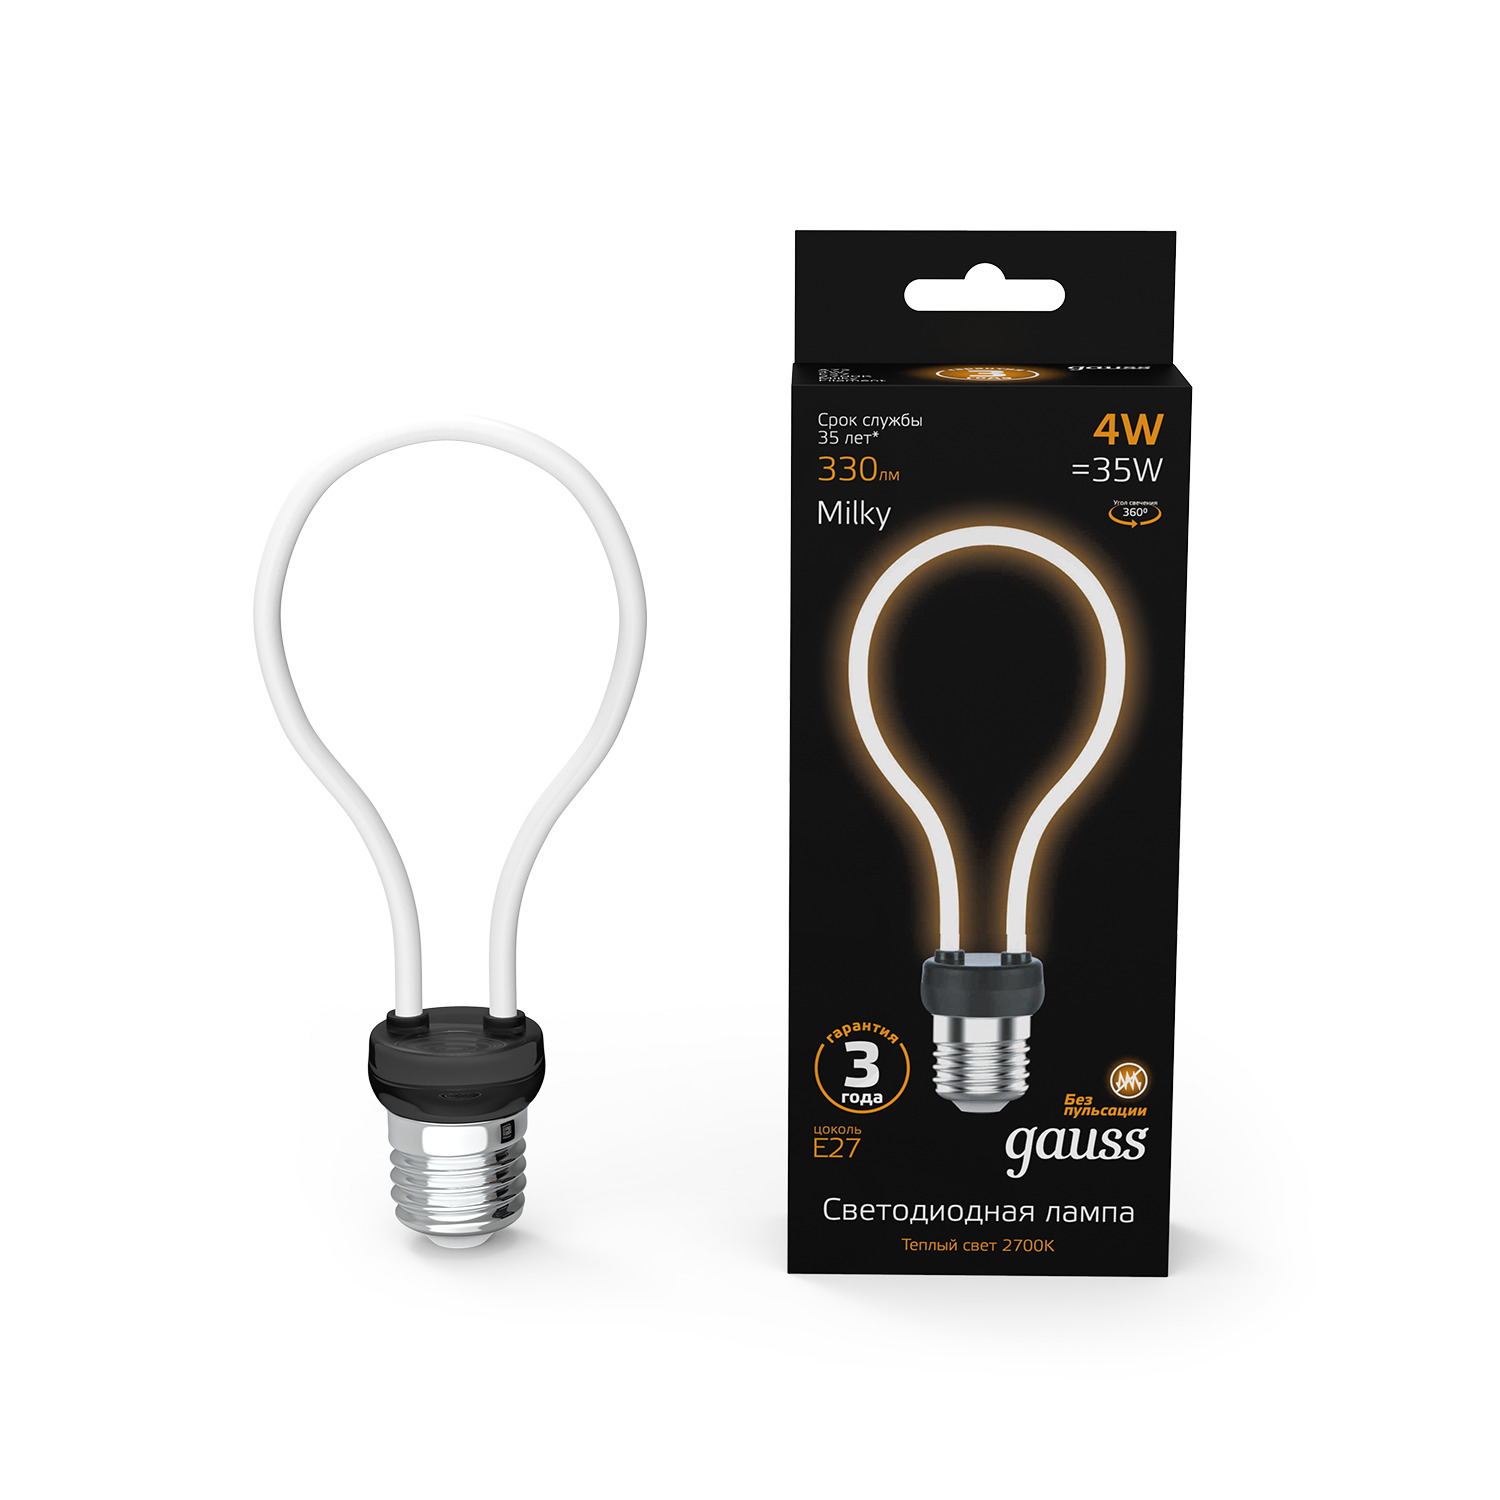 Лампа Gauss LED Filament Bulbless A72 Milky E27 4W 330 Лм 2700K 72x160мм лампа gauss led filament bulbless st64 milky e27 4w 330 лм 2700k 64x165мм